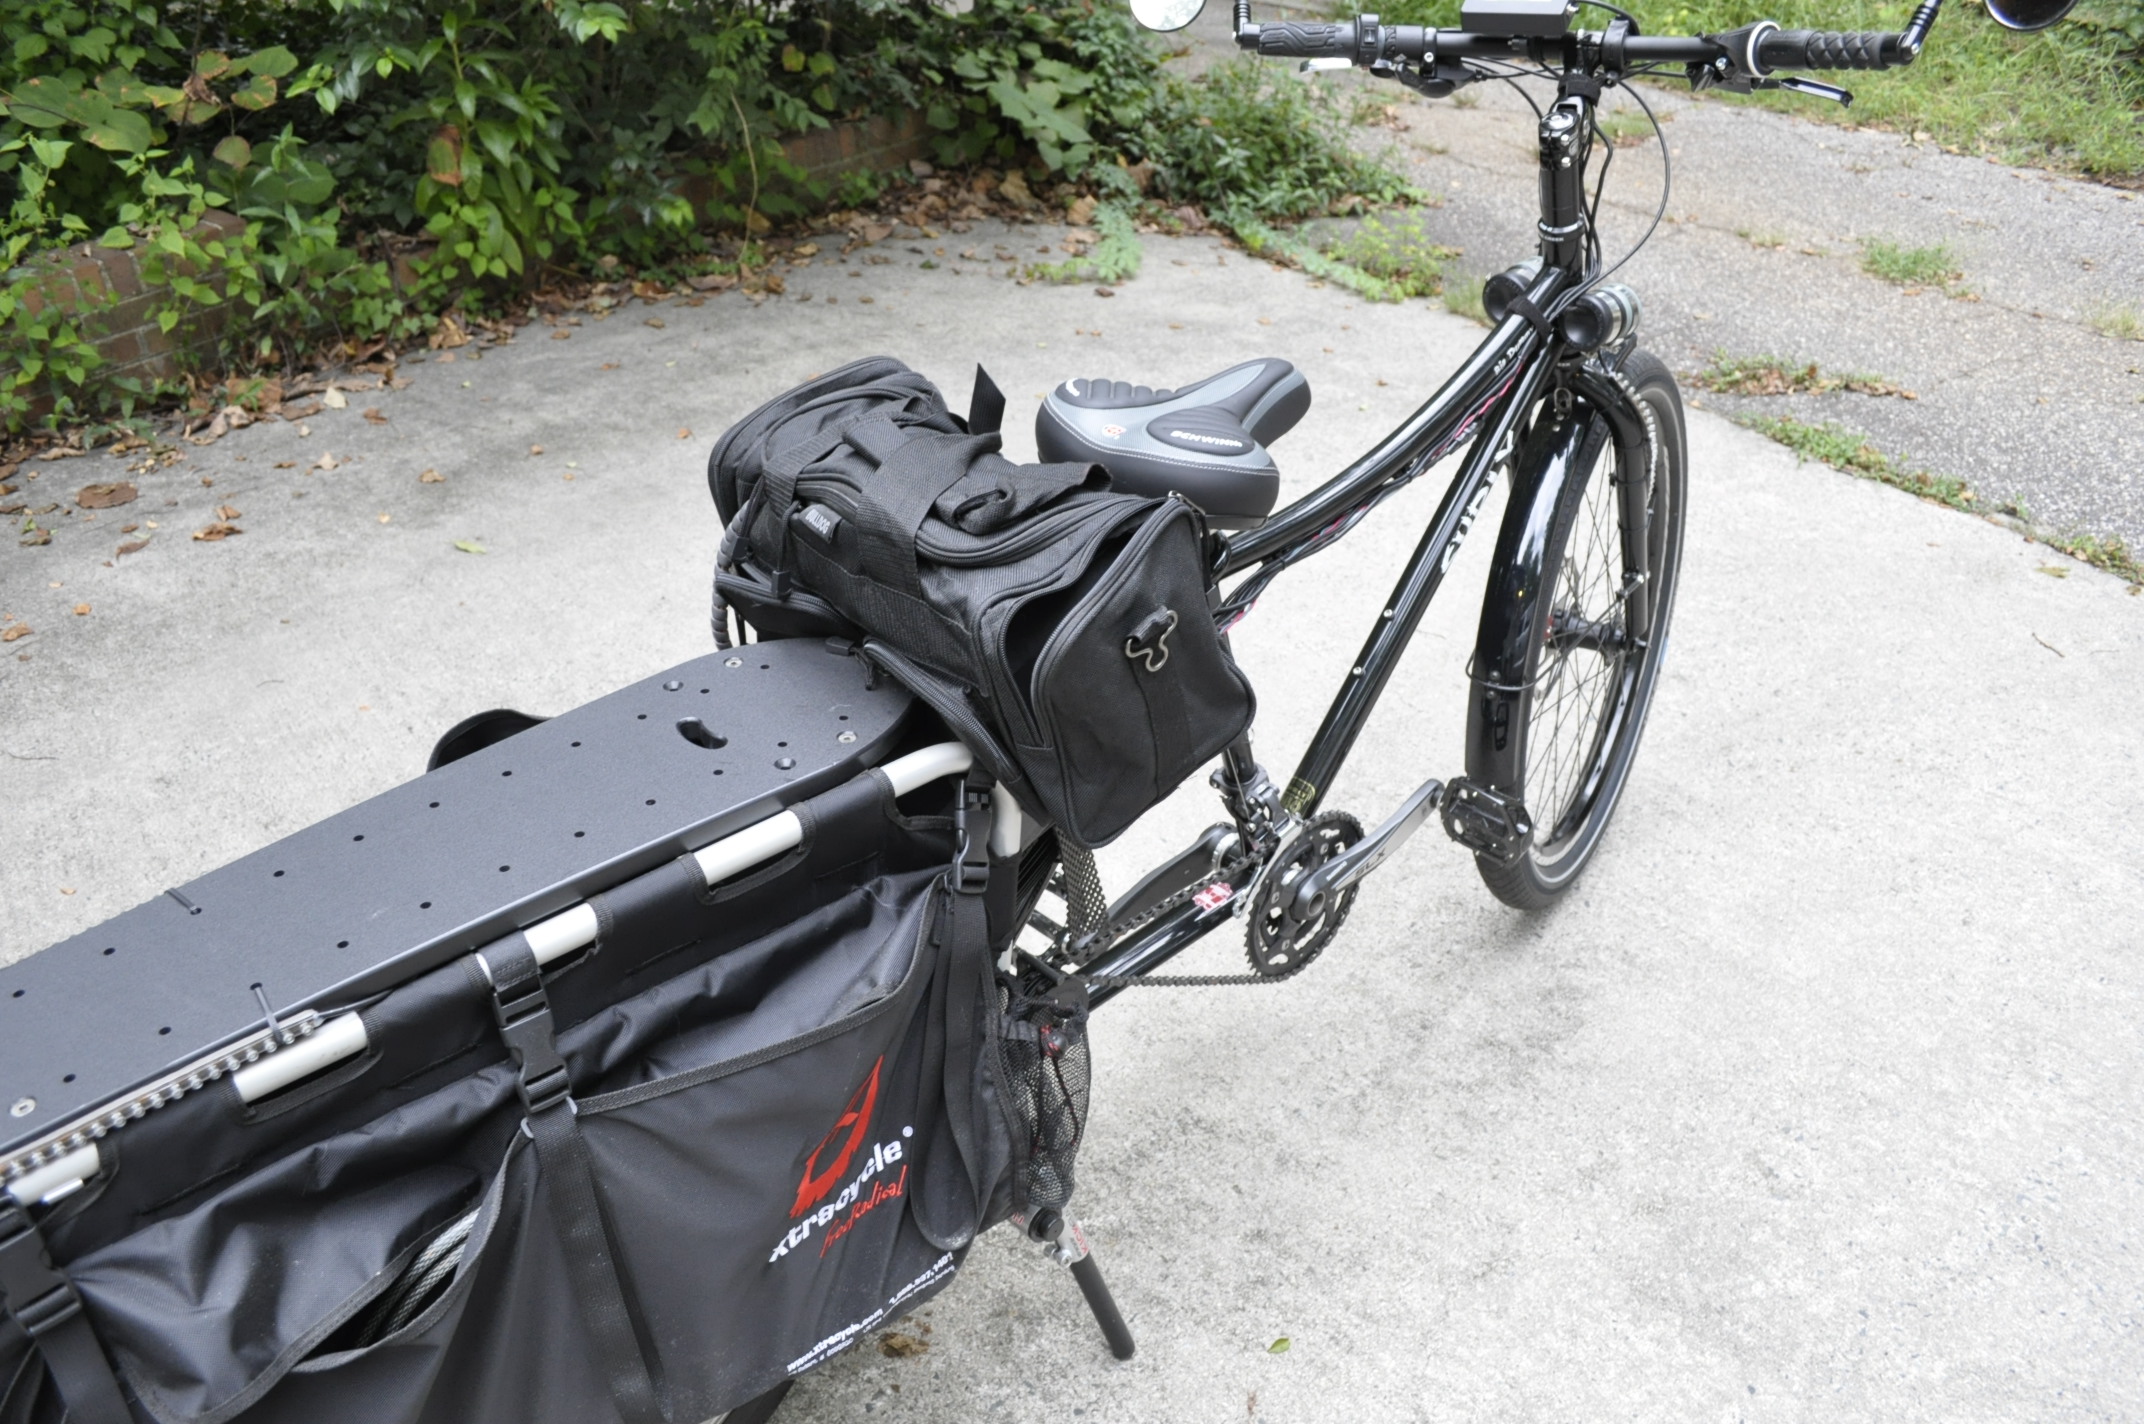 Third iteration cargo bike